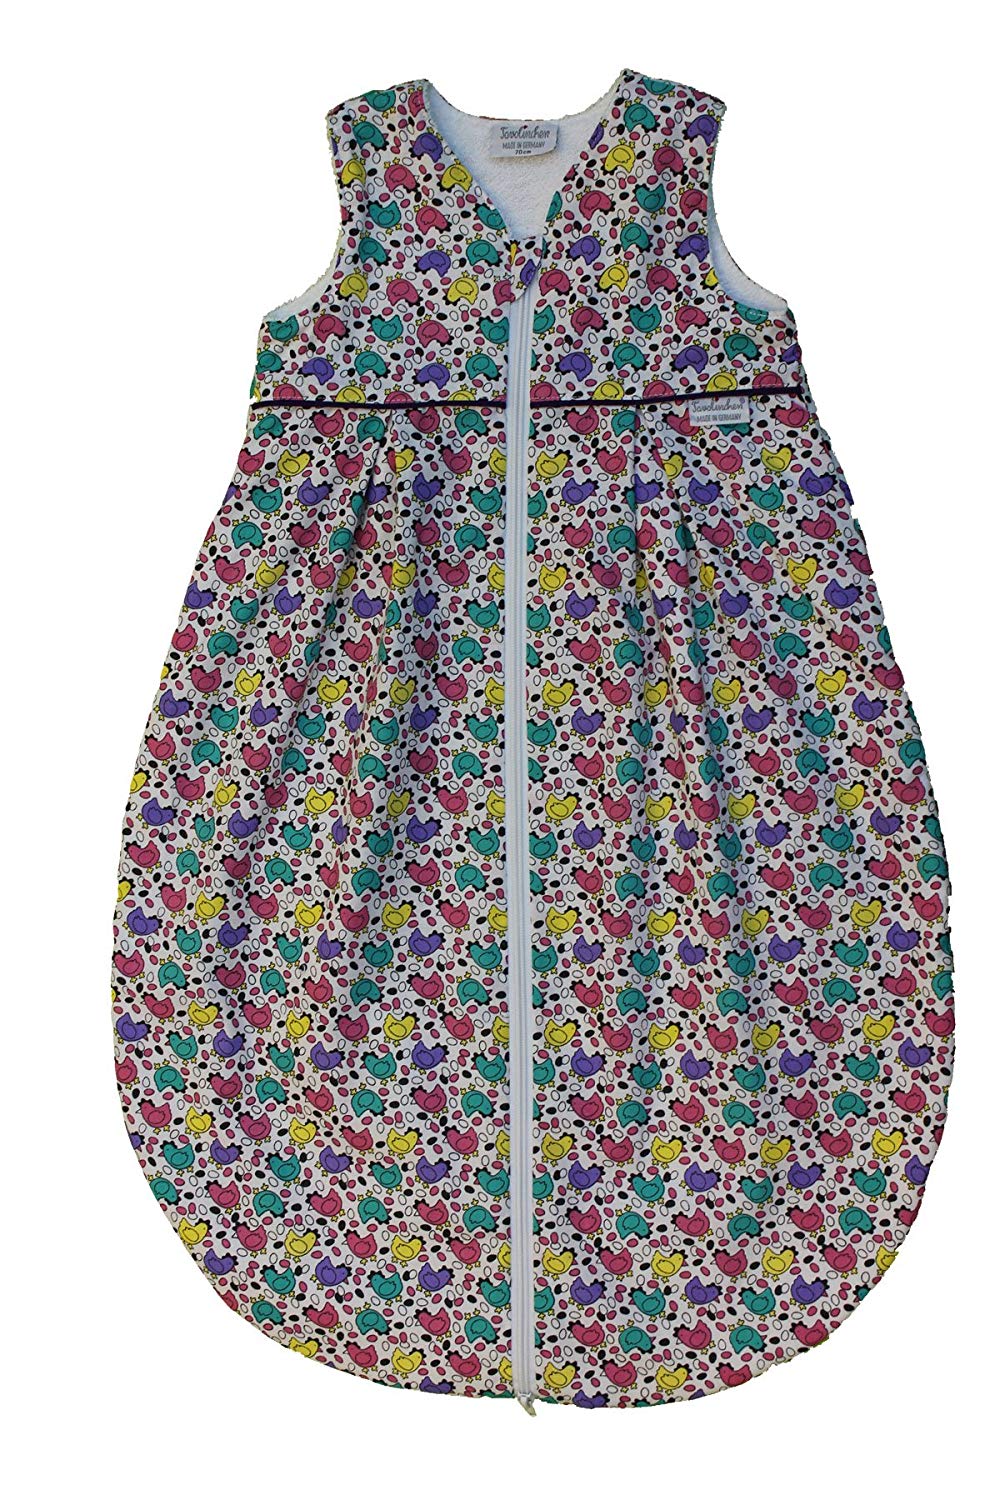 Tavolinchen 35/350 Terry Cloth Colourful Chick Sleeping Bag 130 cm